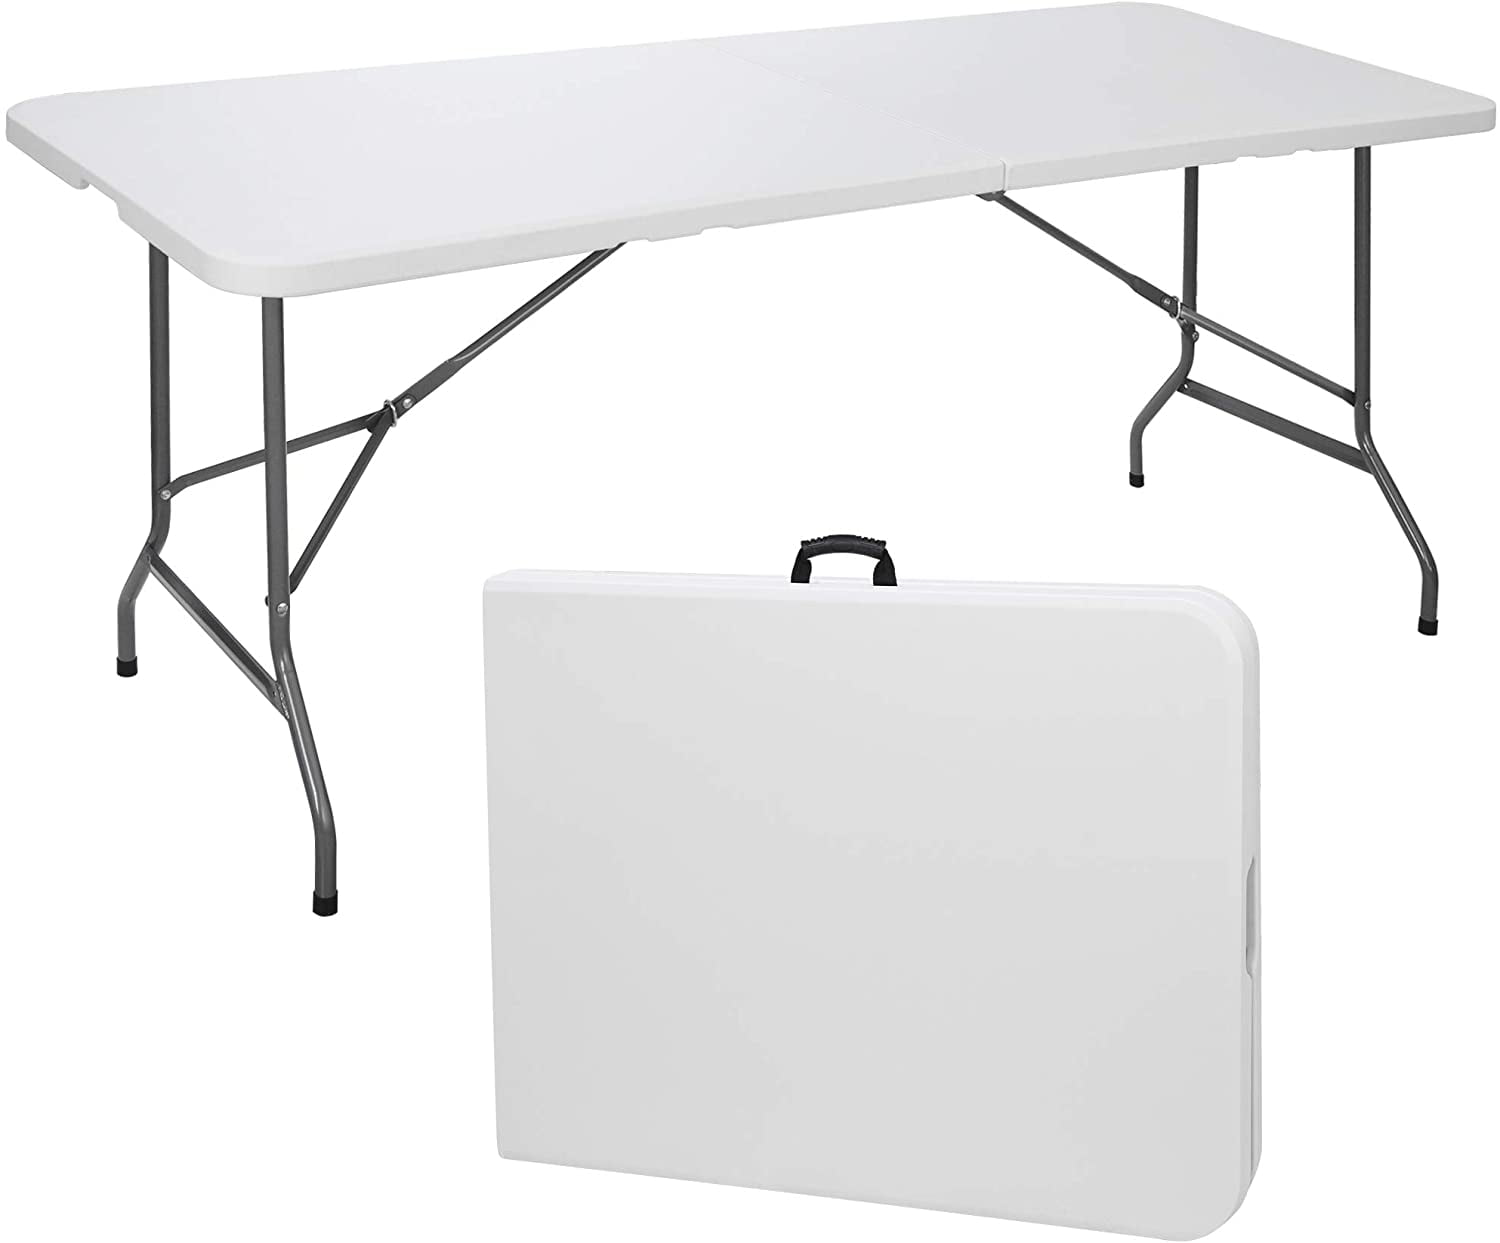 6FT White Portable Aluminum Folding Picnic Table Outdoor Garden BBQ Party Desk 